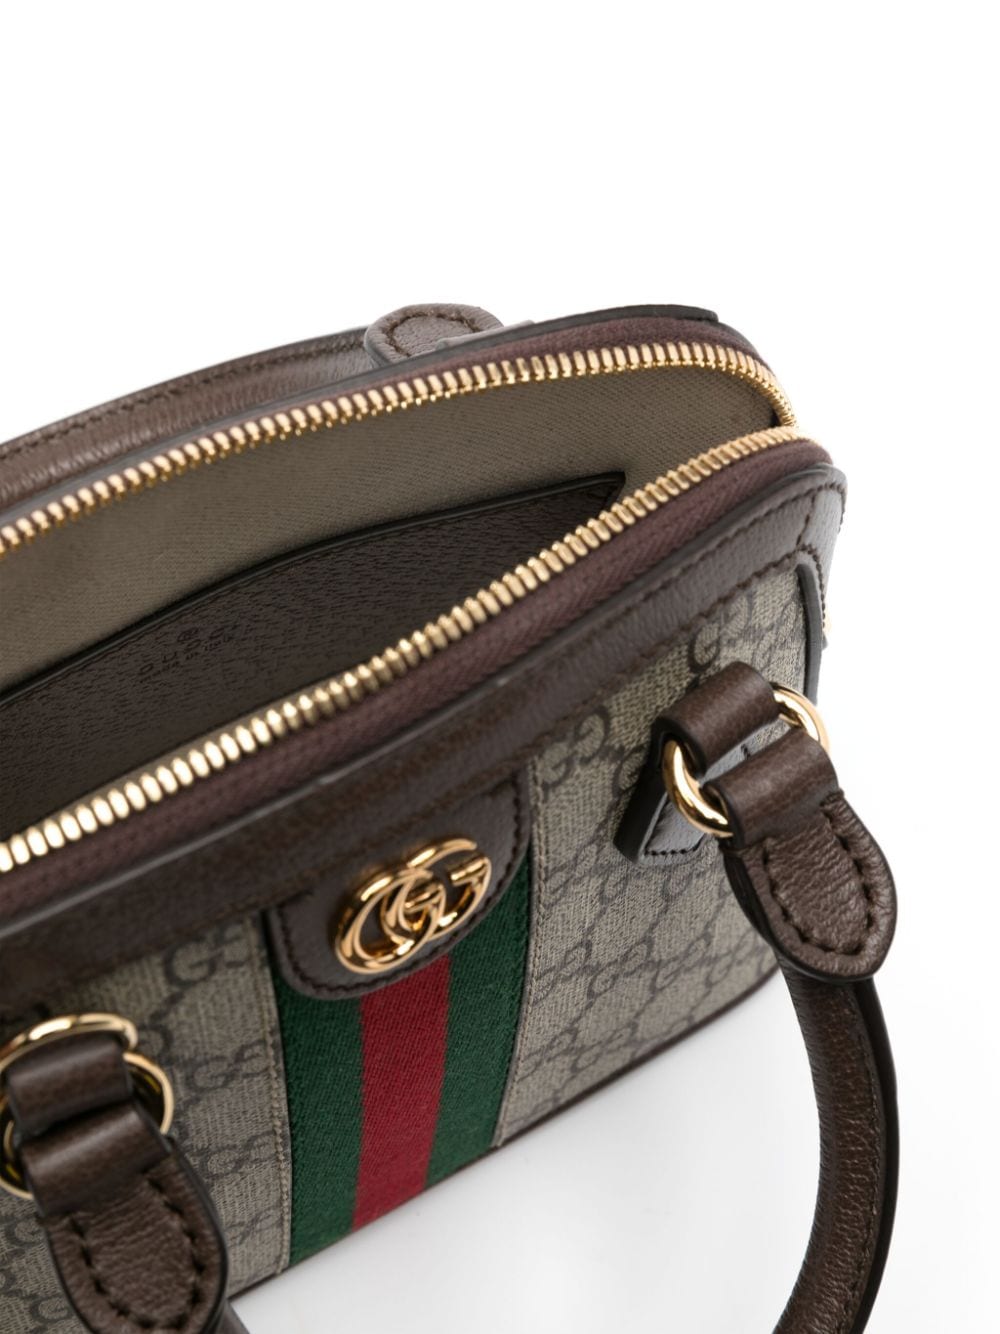 Gucci Mini Ophidia Tote Bag